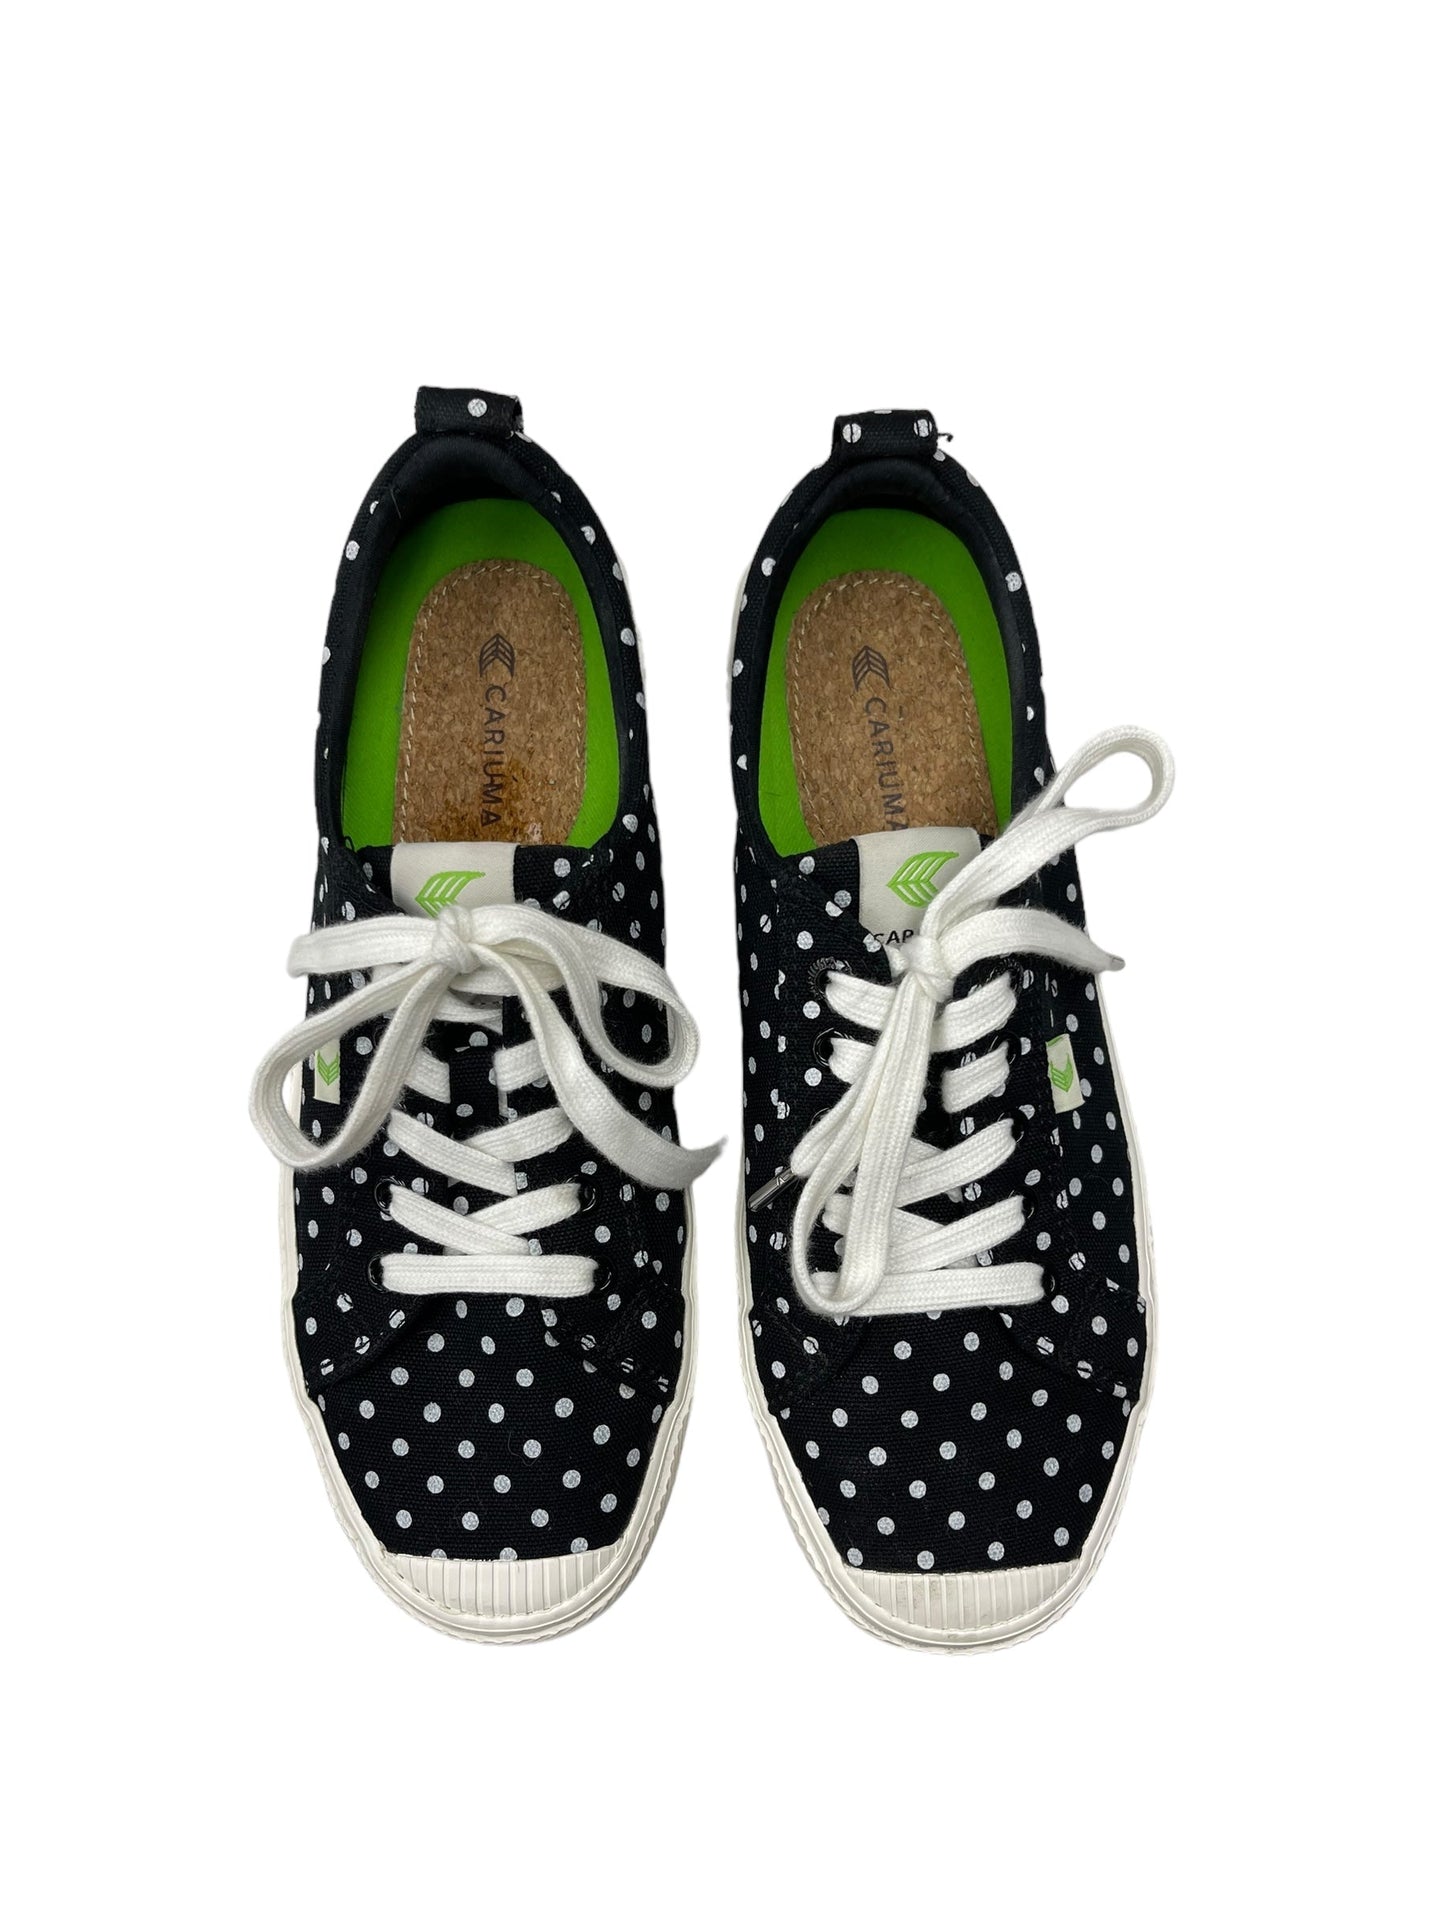 Polkadot Pattern Shoes Sneakers Cariuma, Size 9